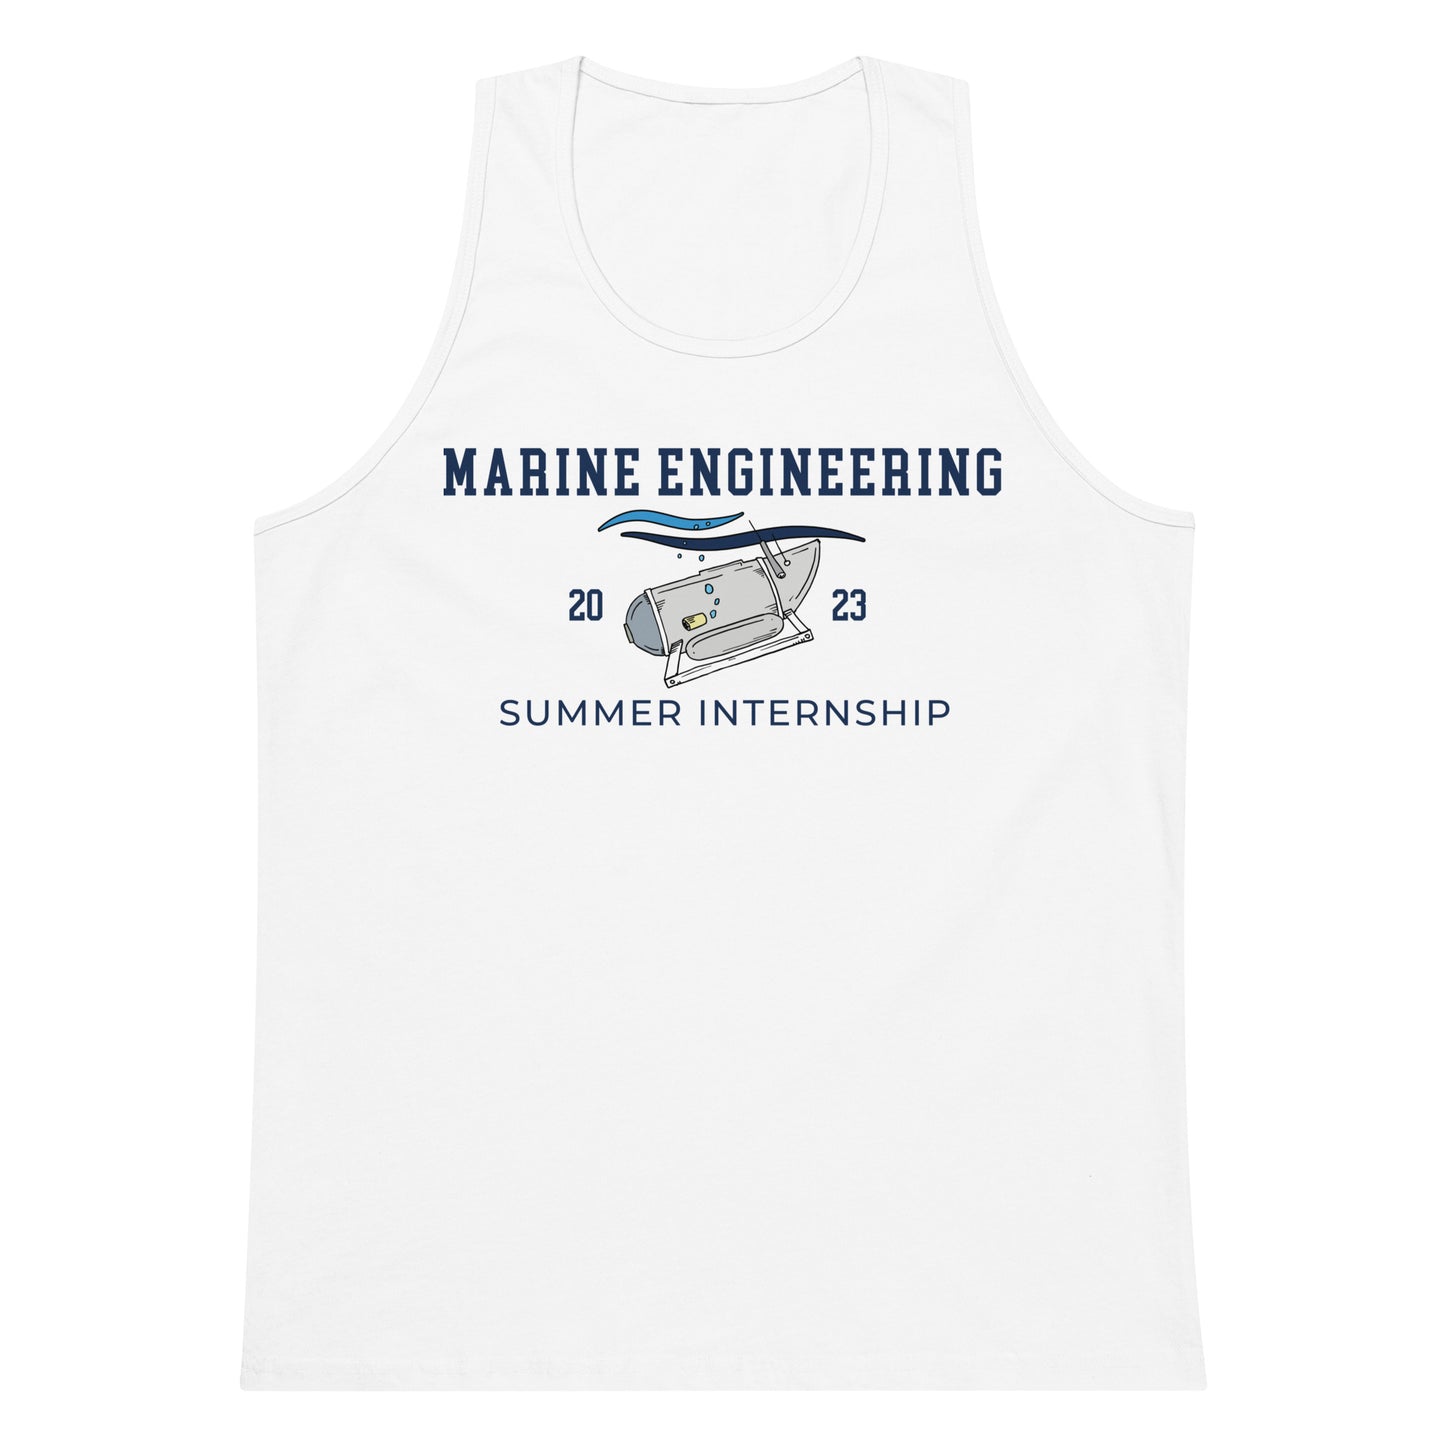 Marine Engineering Summer Internship tank top